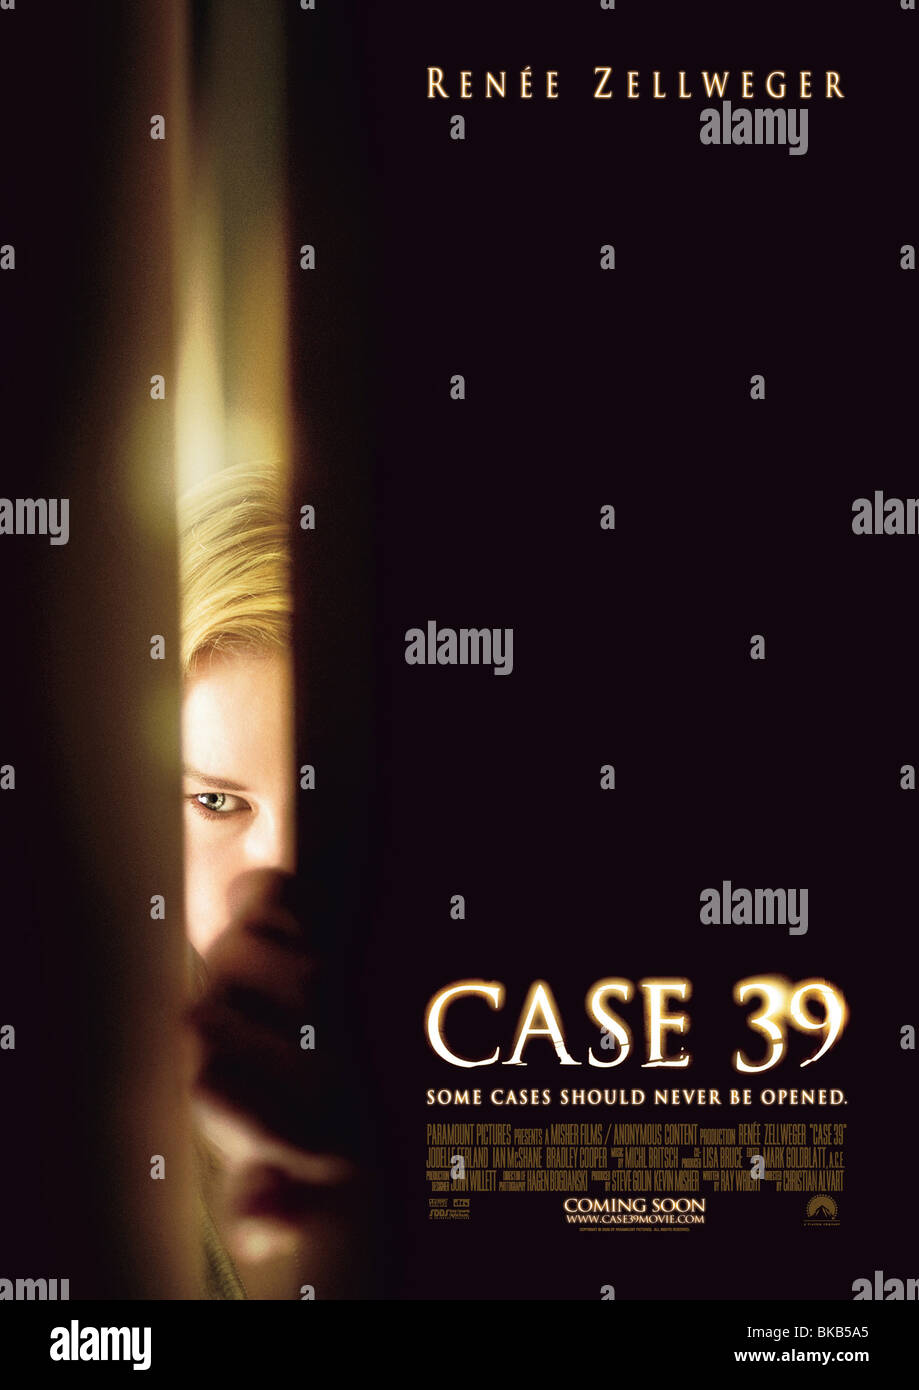 Case 39 Year : 2009 Director : Christian Alvart Renée Zellweger Movie poster (USA) Stock Photo